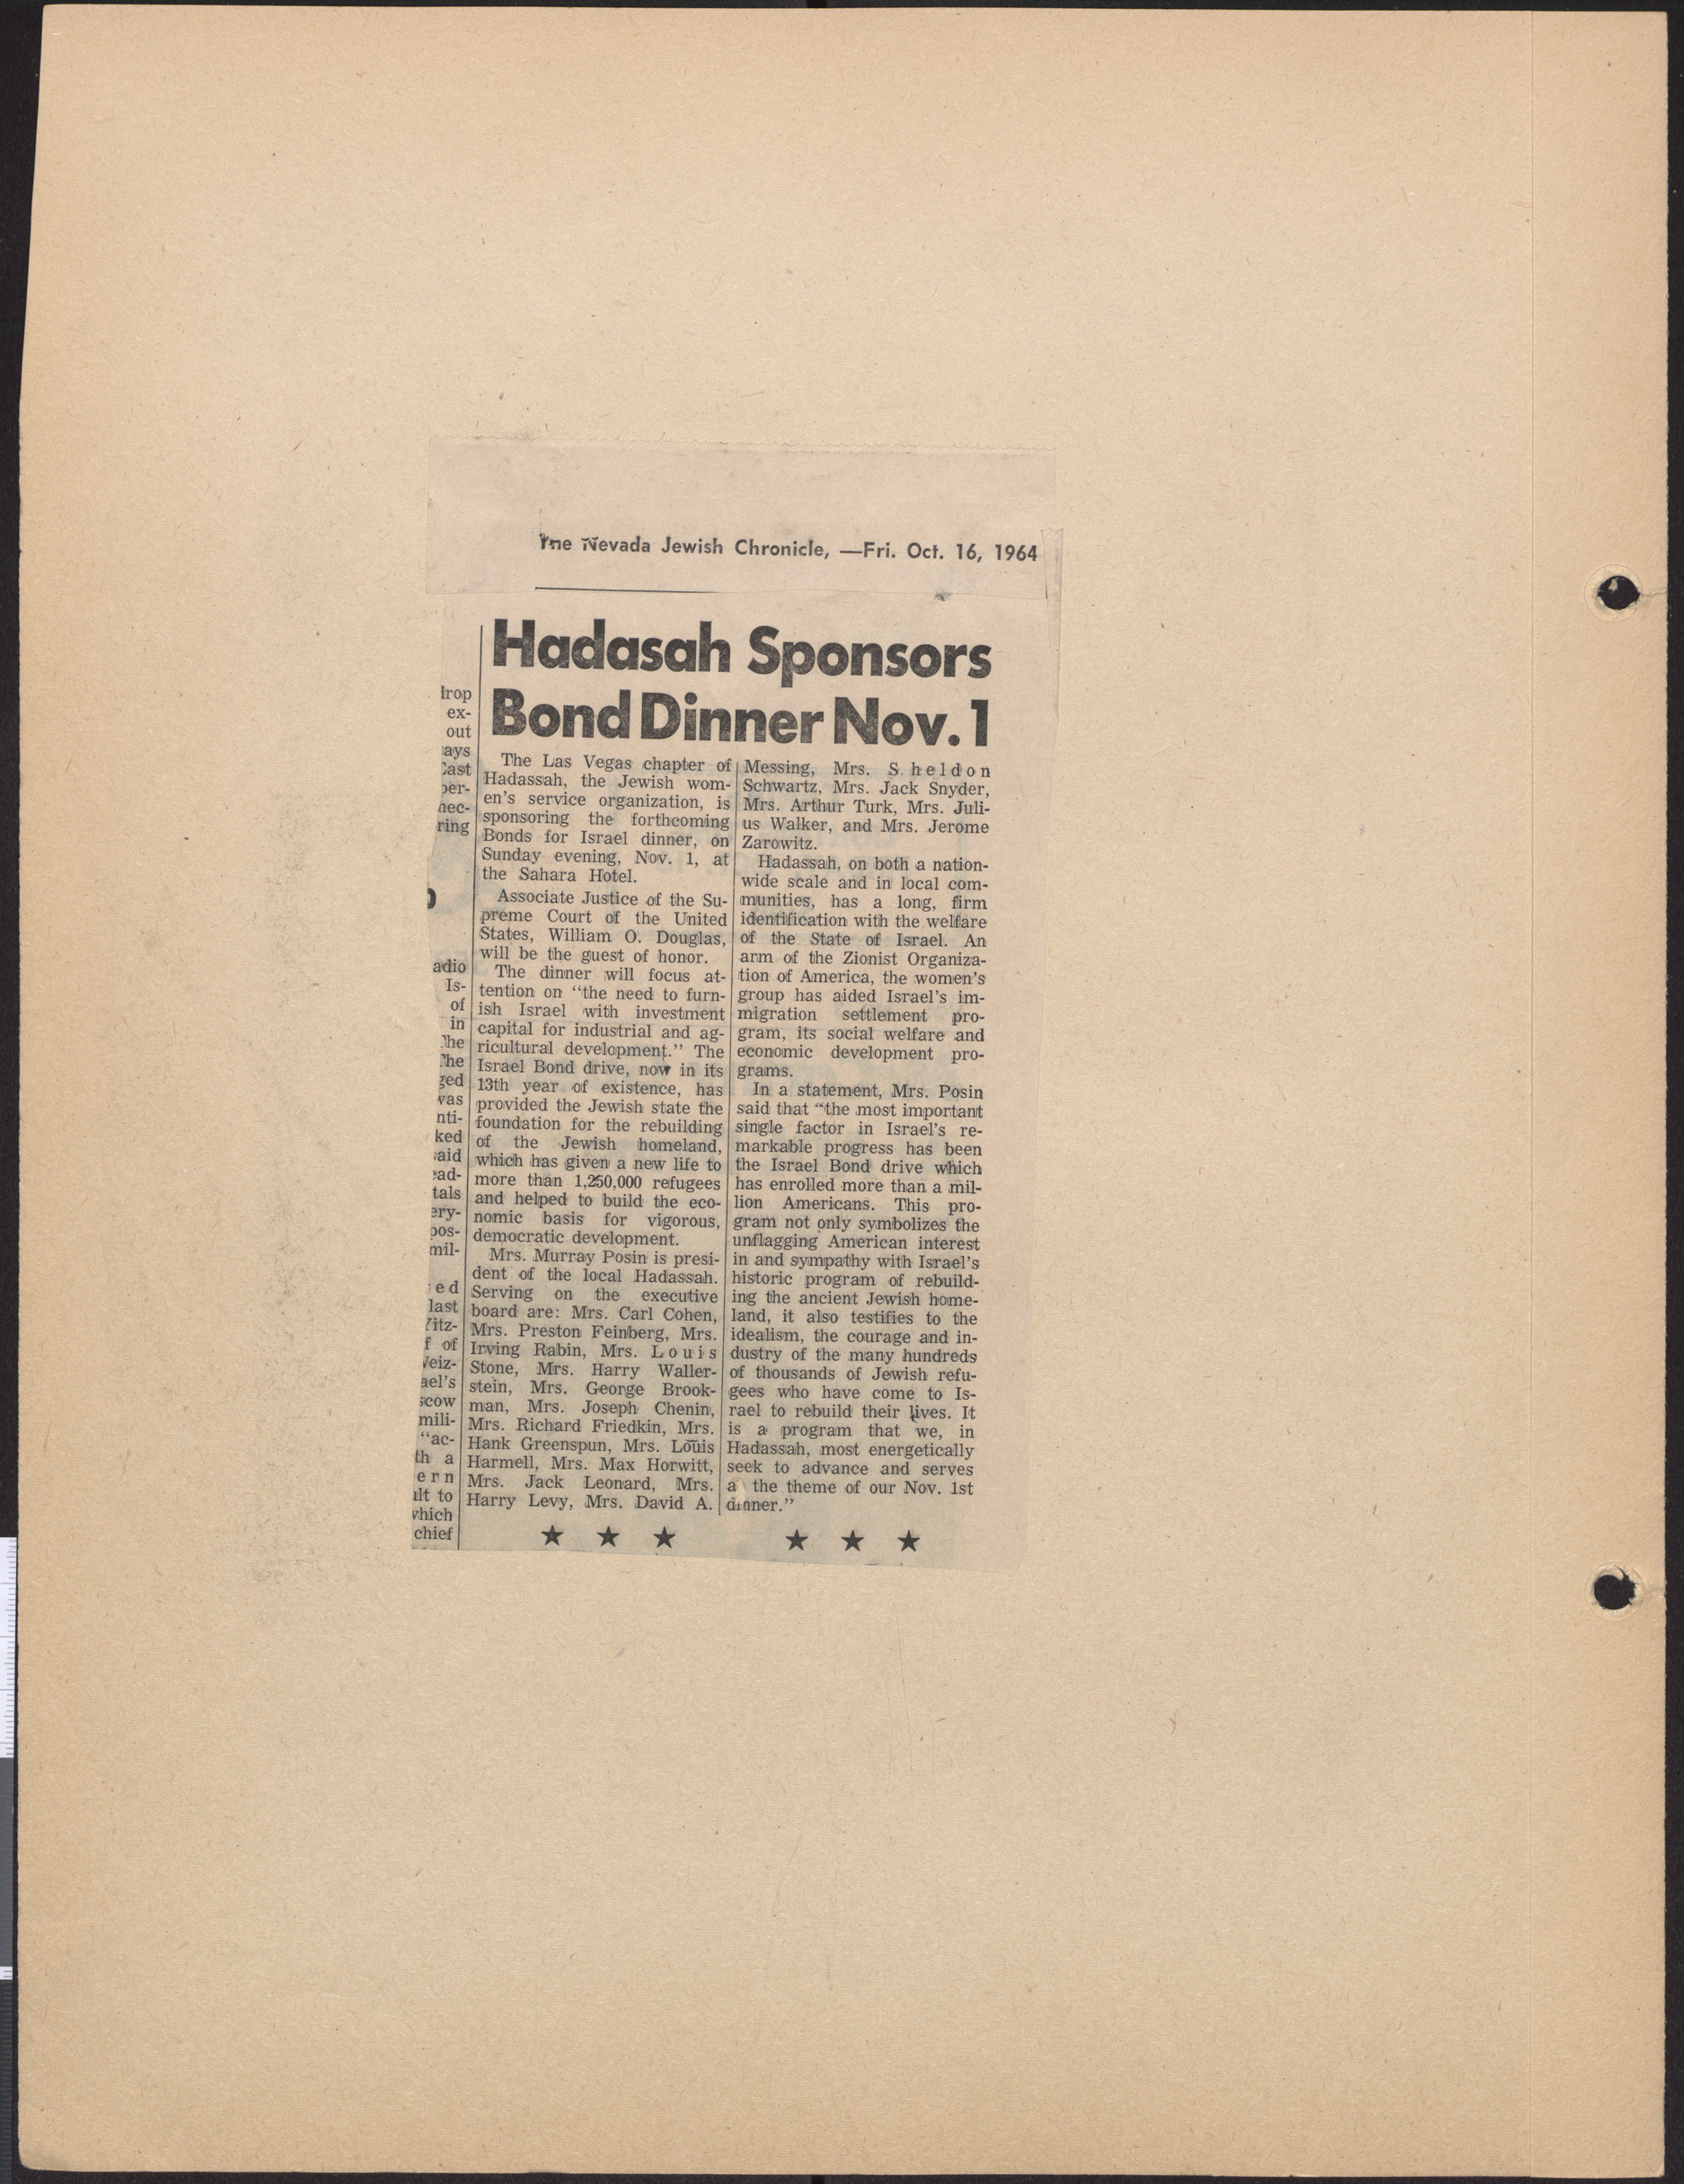 Newspaper clipping, Hadassah sponsors bond dinner Nov. 1, The Nevada Jewish Chronicle, October 16, 1964